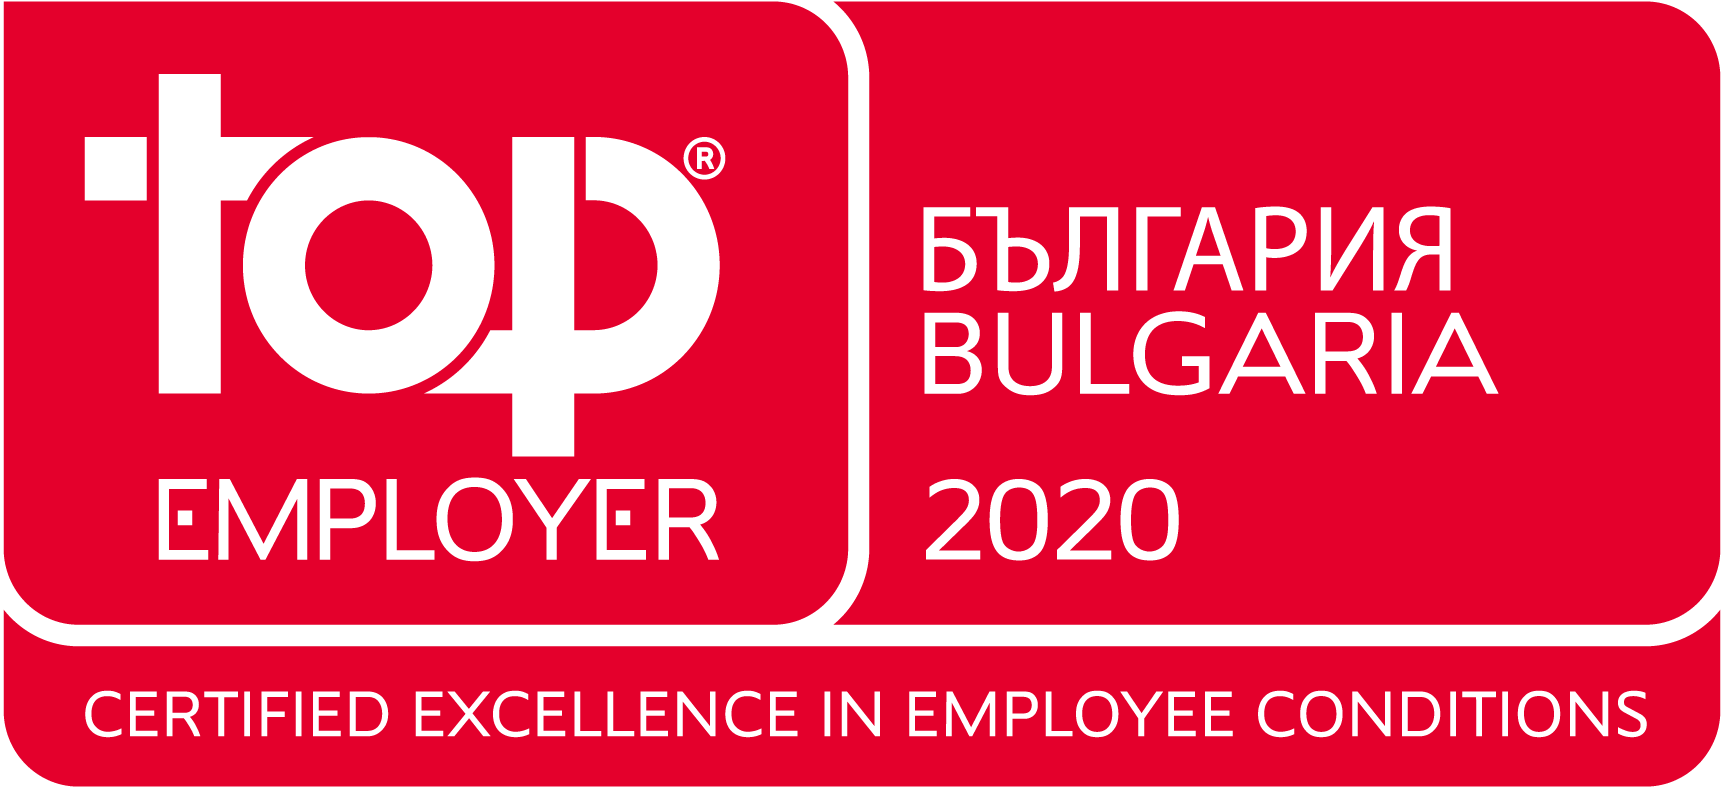 1 of 1 logos - Bulgaria